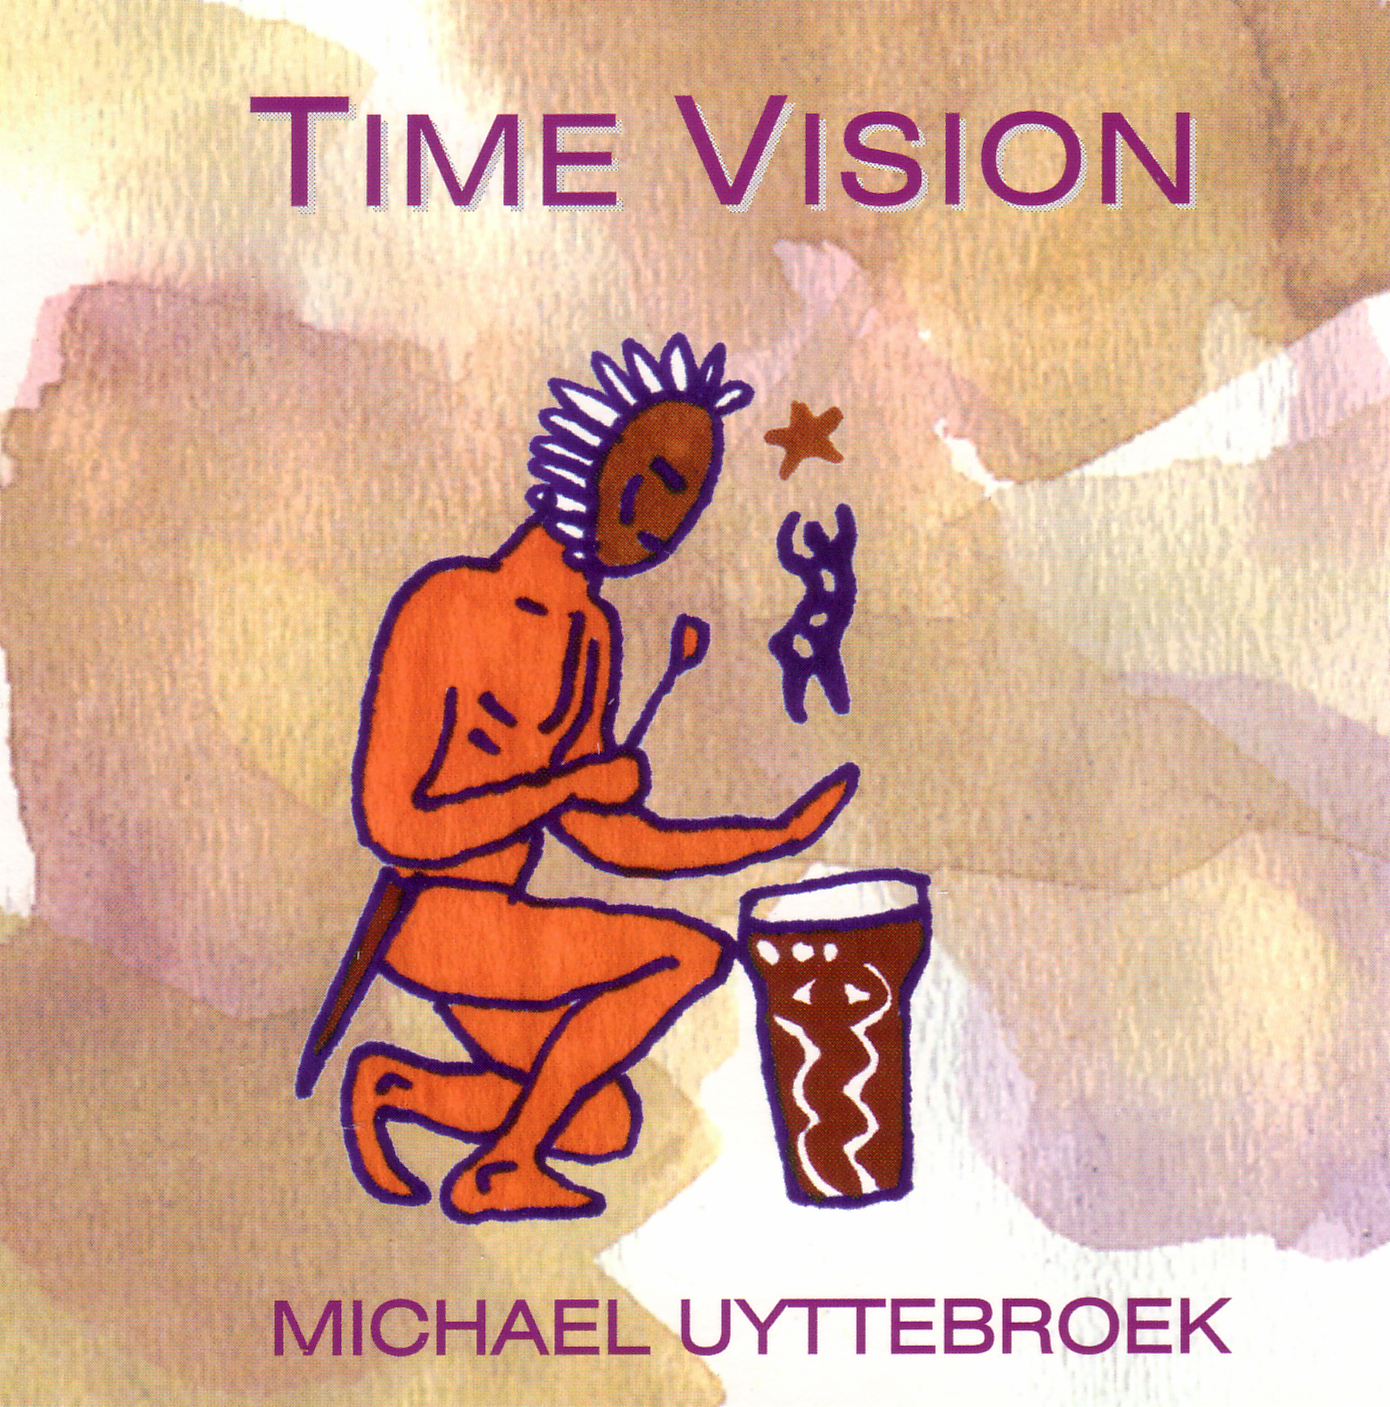 Time Vision CD